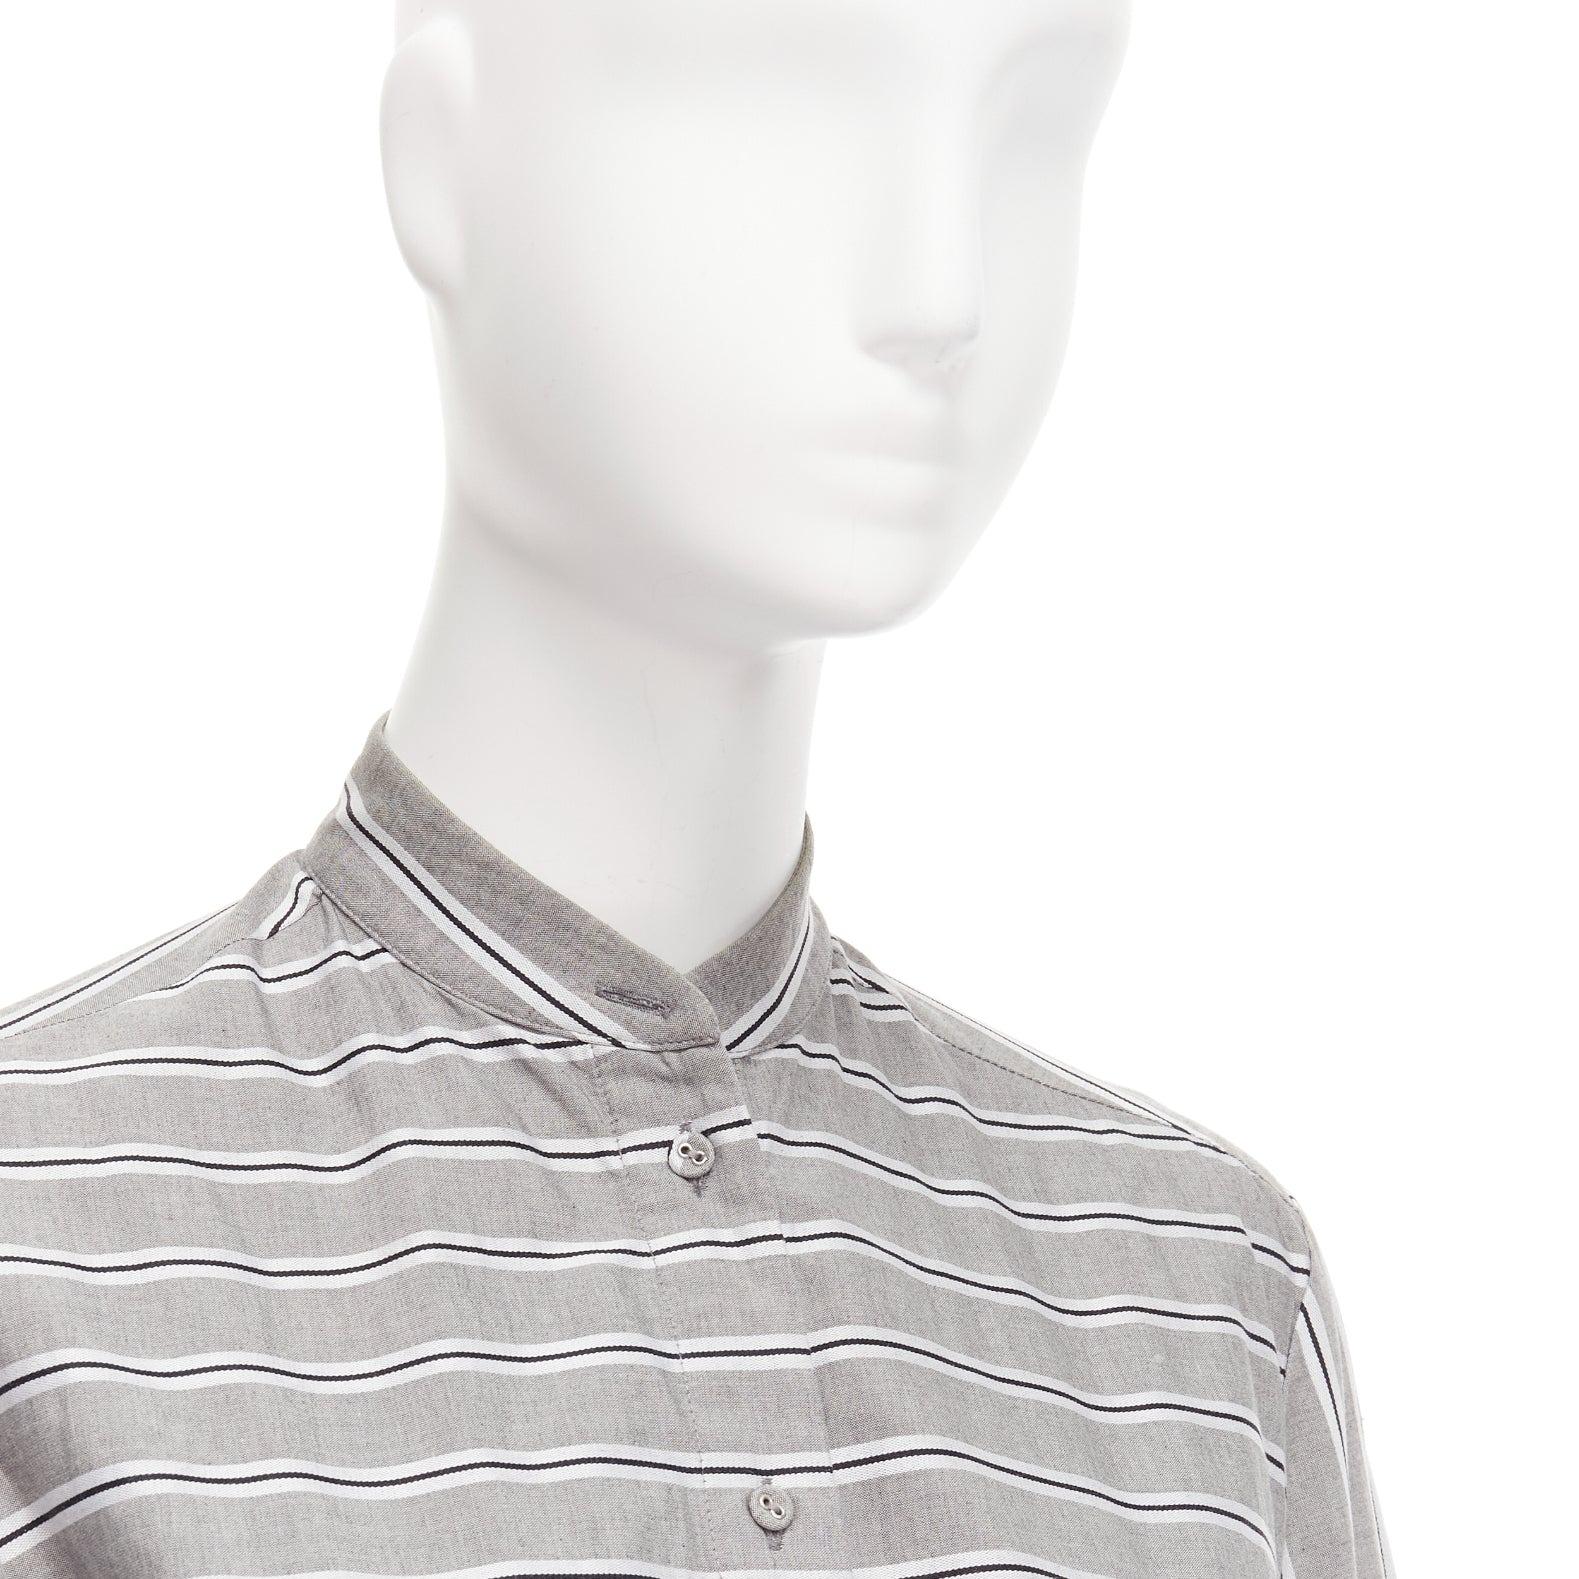 VVB VICTORIA BECKHAM grey striped cotton oversized sash belt tunic shirt UK6 XS For Sale 2